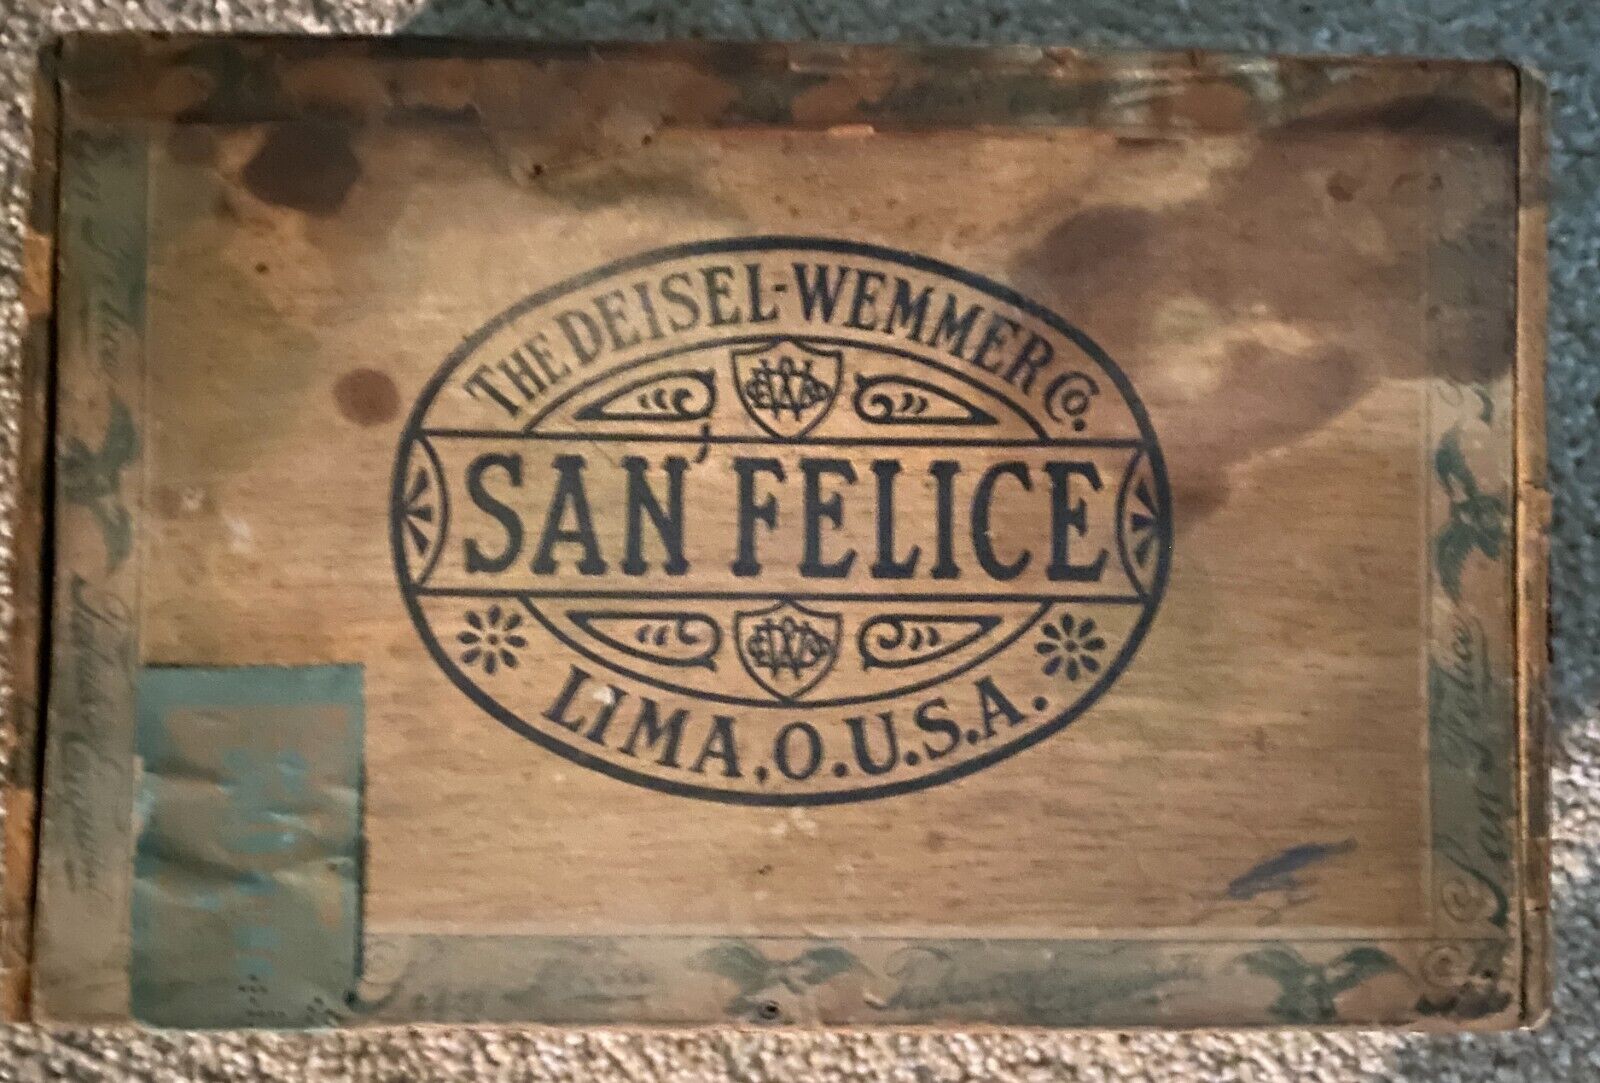 Vintage San Felice Wooden Cigar Box 5 cents The Deisel-Wemmer Co, Lima Oh